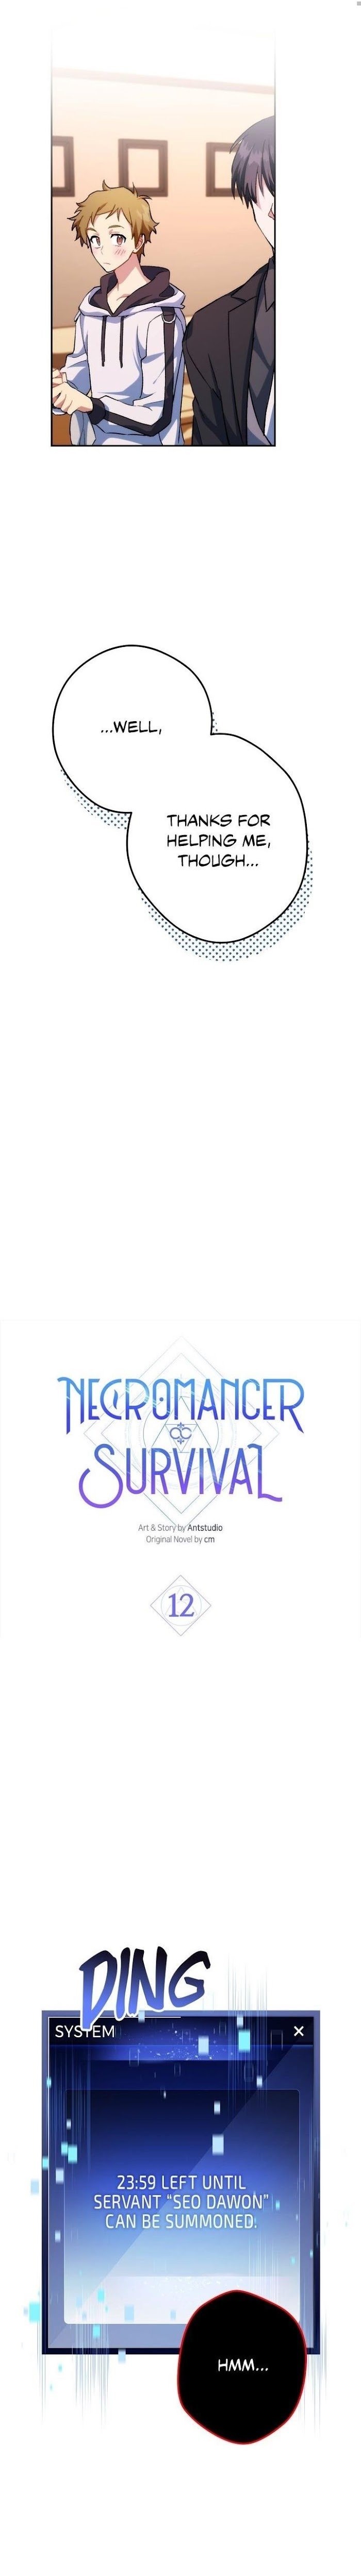 Necromancer Survival chapter 12